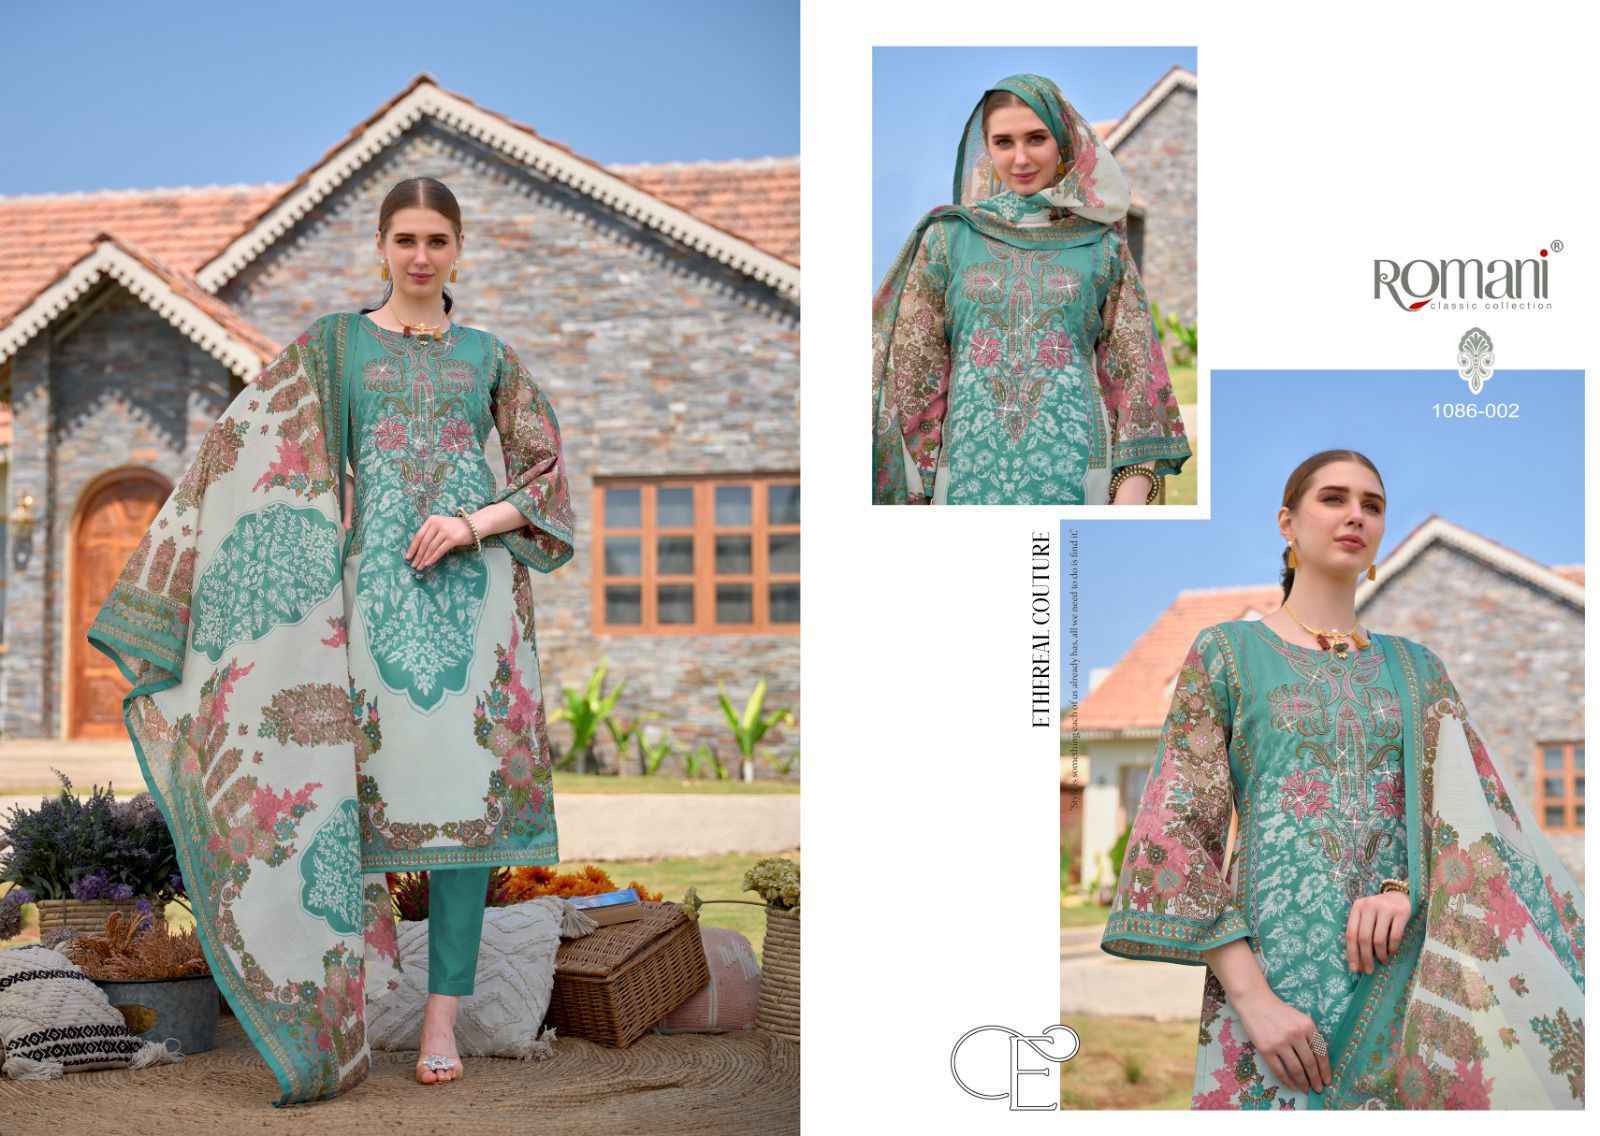 Romani Aarzu Vol 3 Cotton Dress Material 8 pcs Catalogue